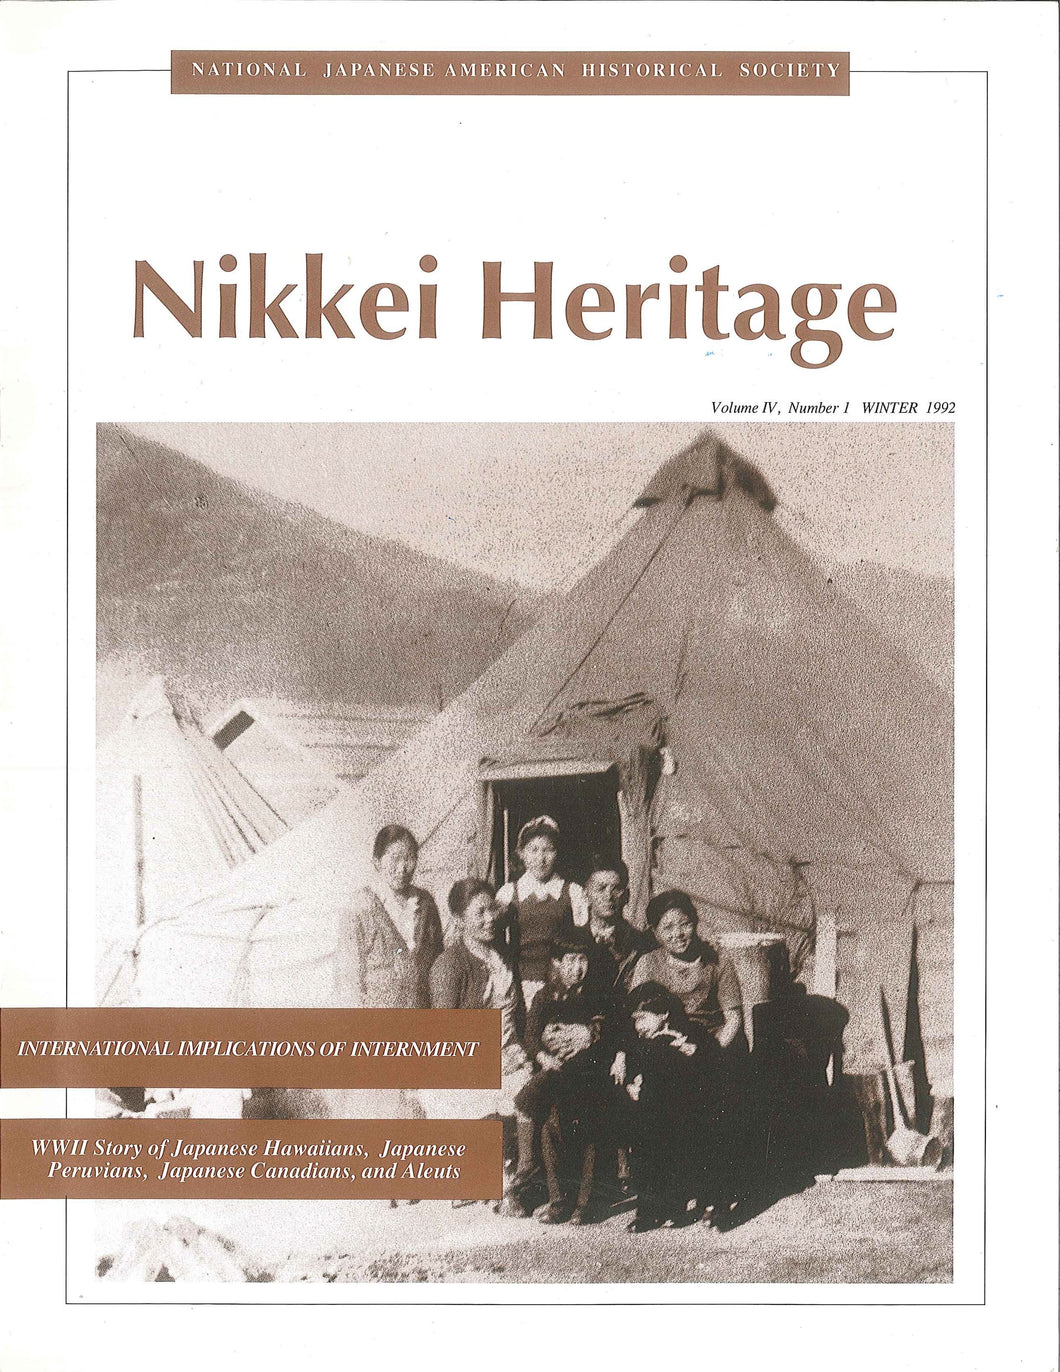 Nikkei Heritage - International Implications of Internment